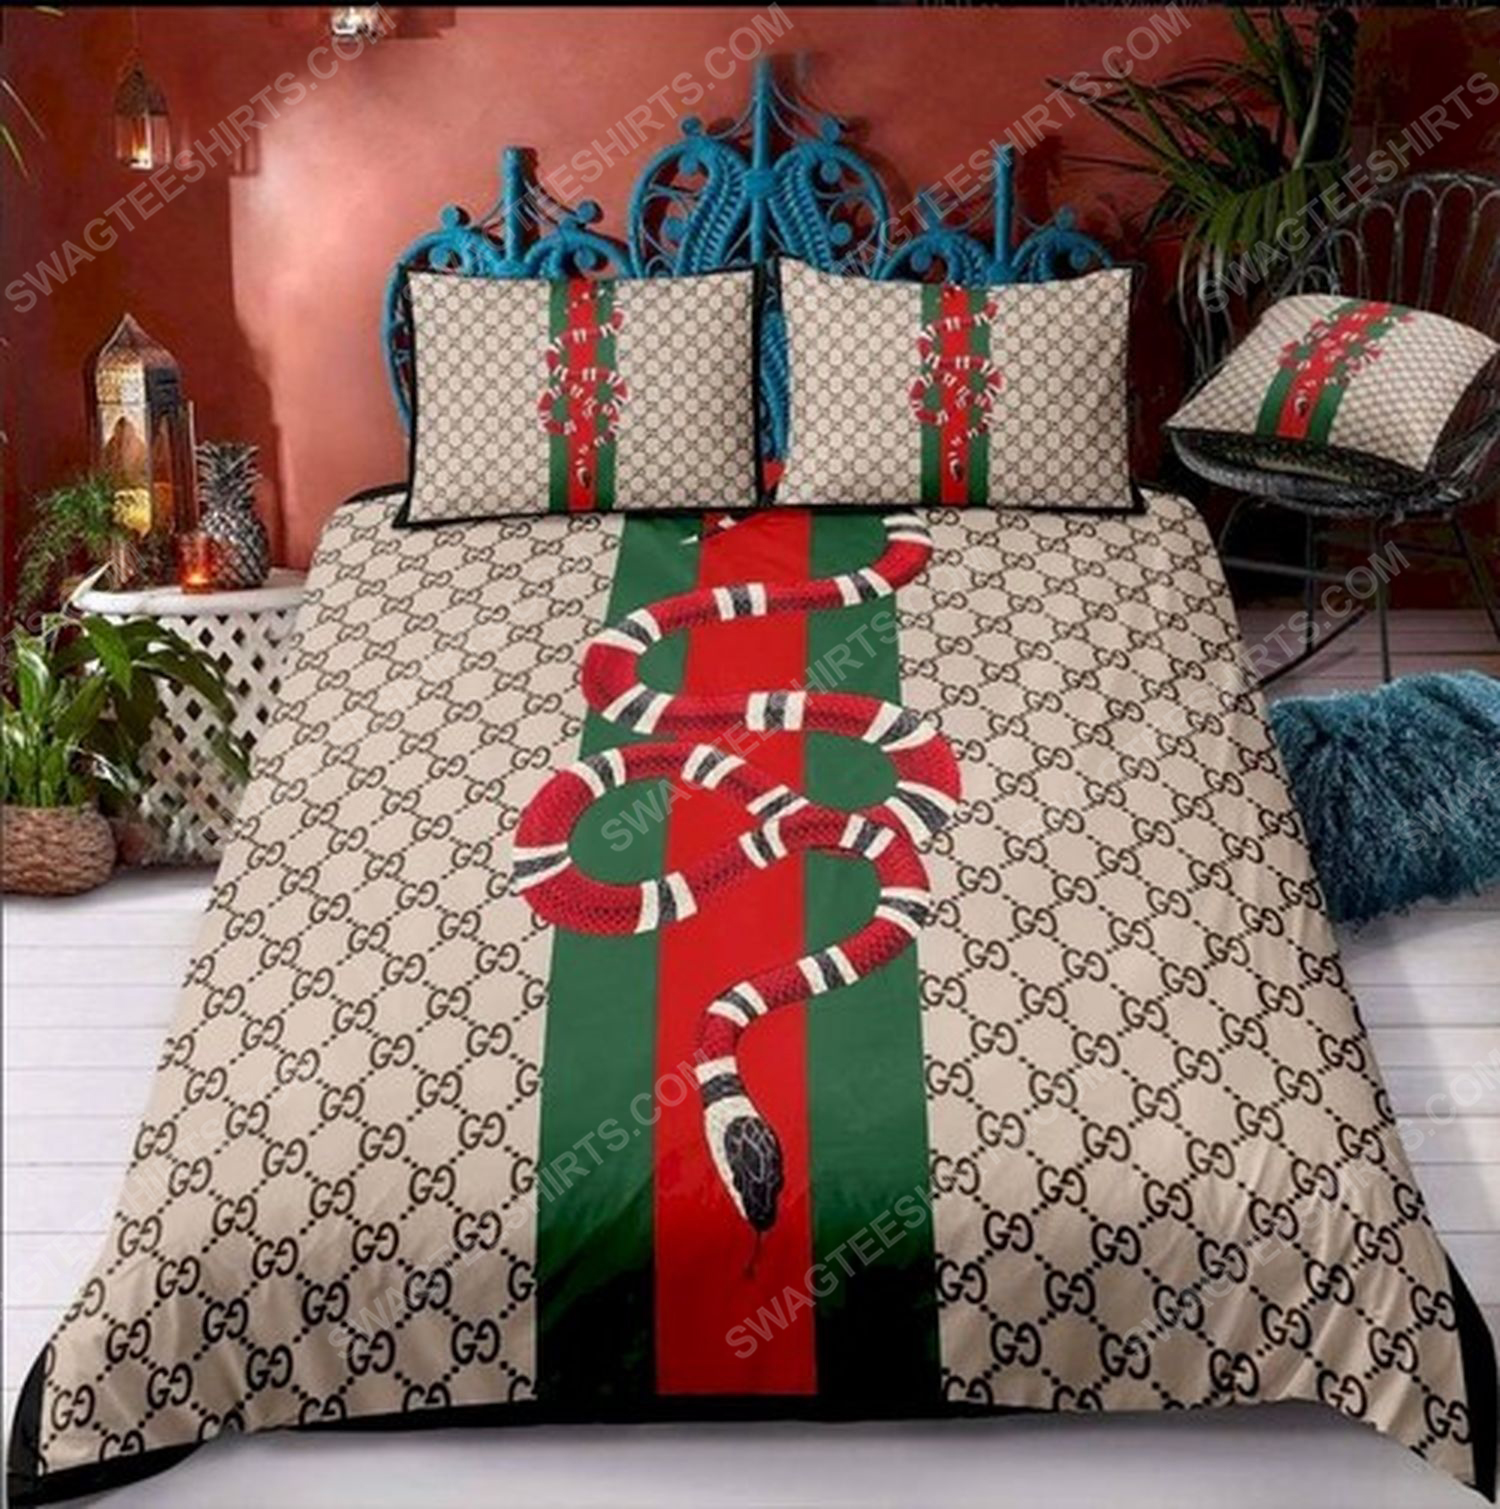 Gucci and snack symbols full print duvet cover bedding set 1